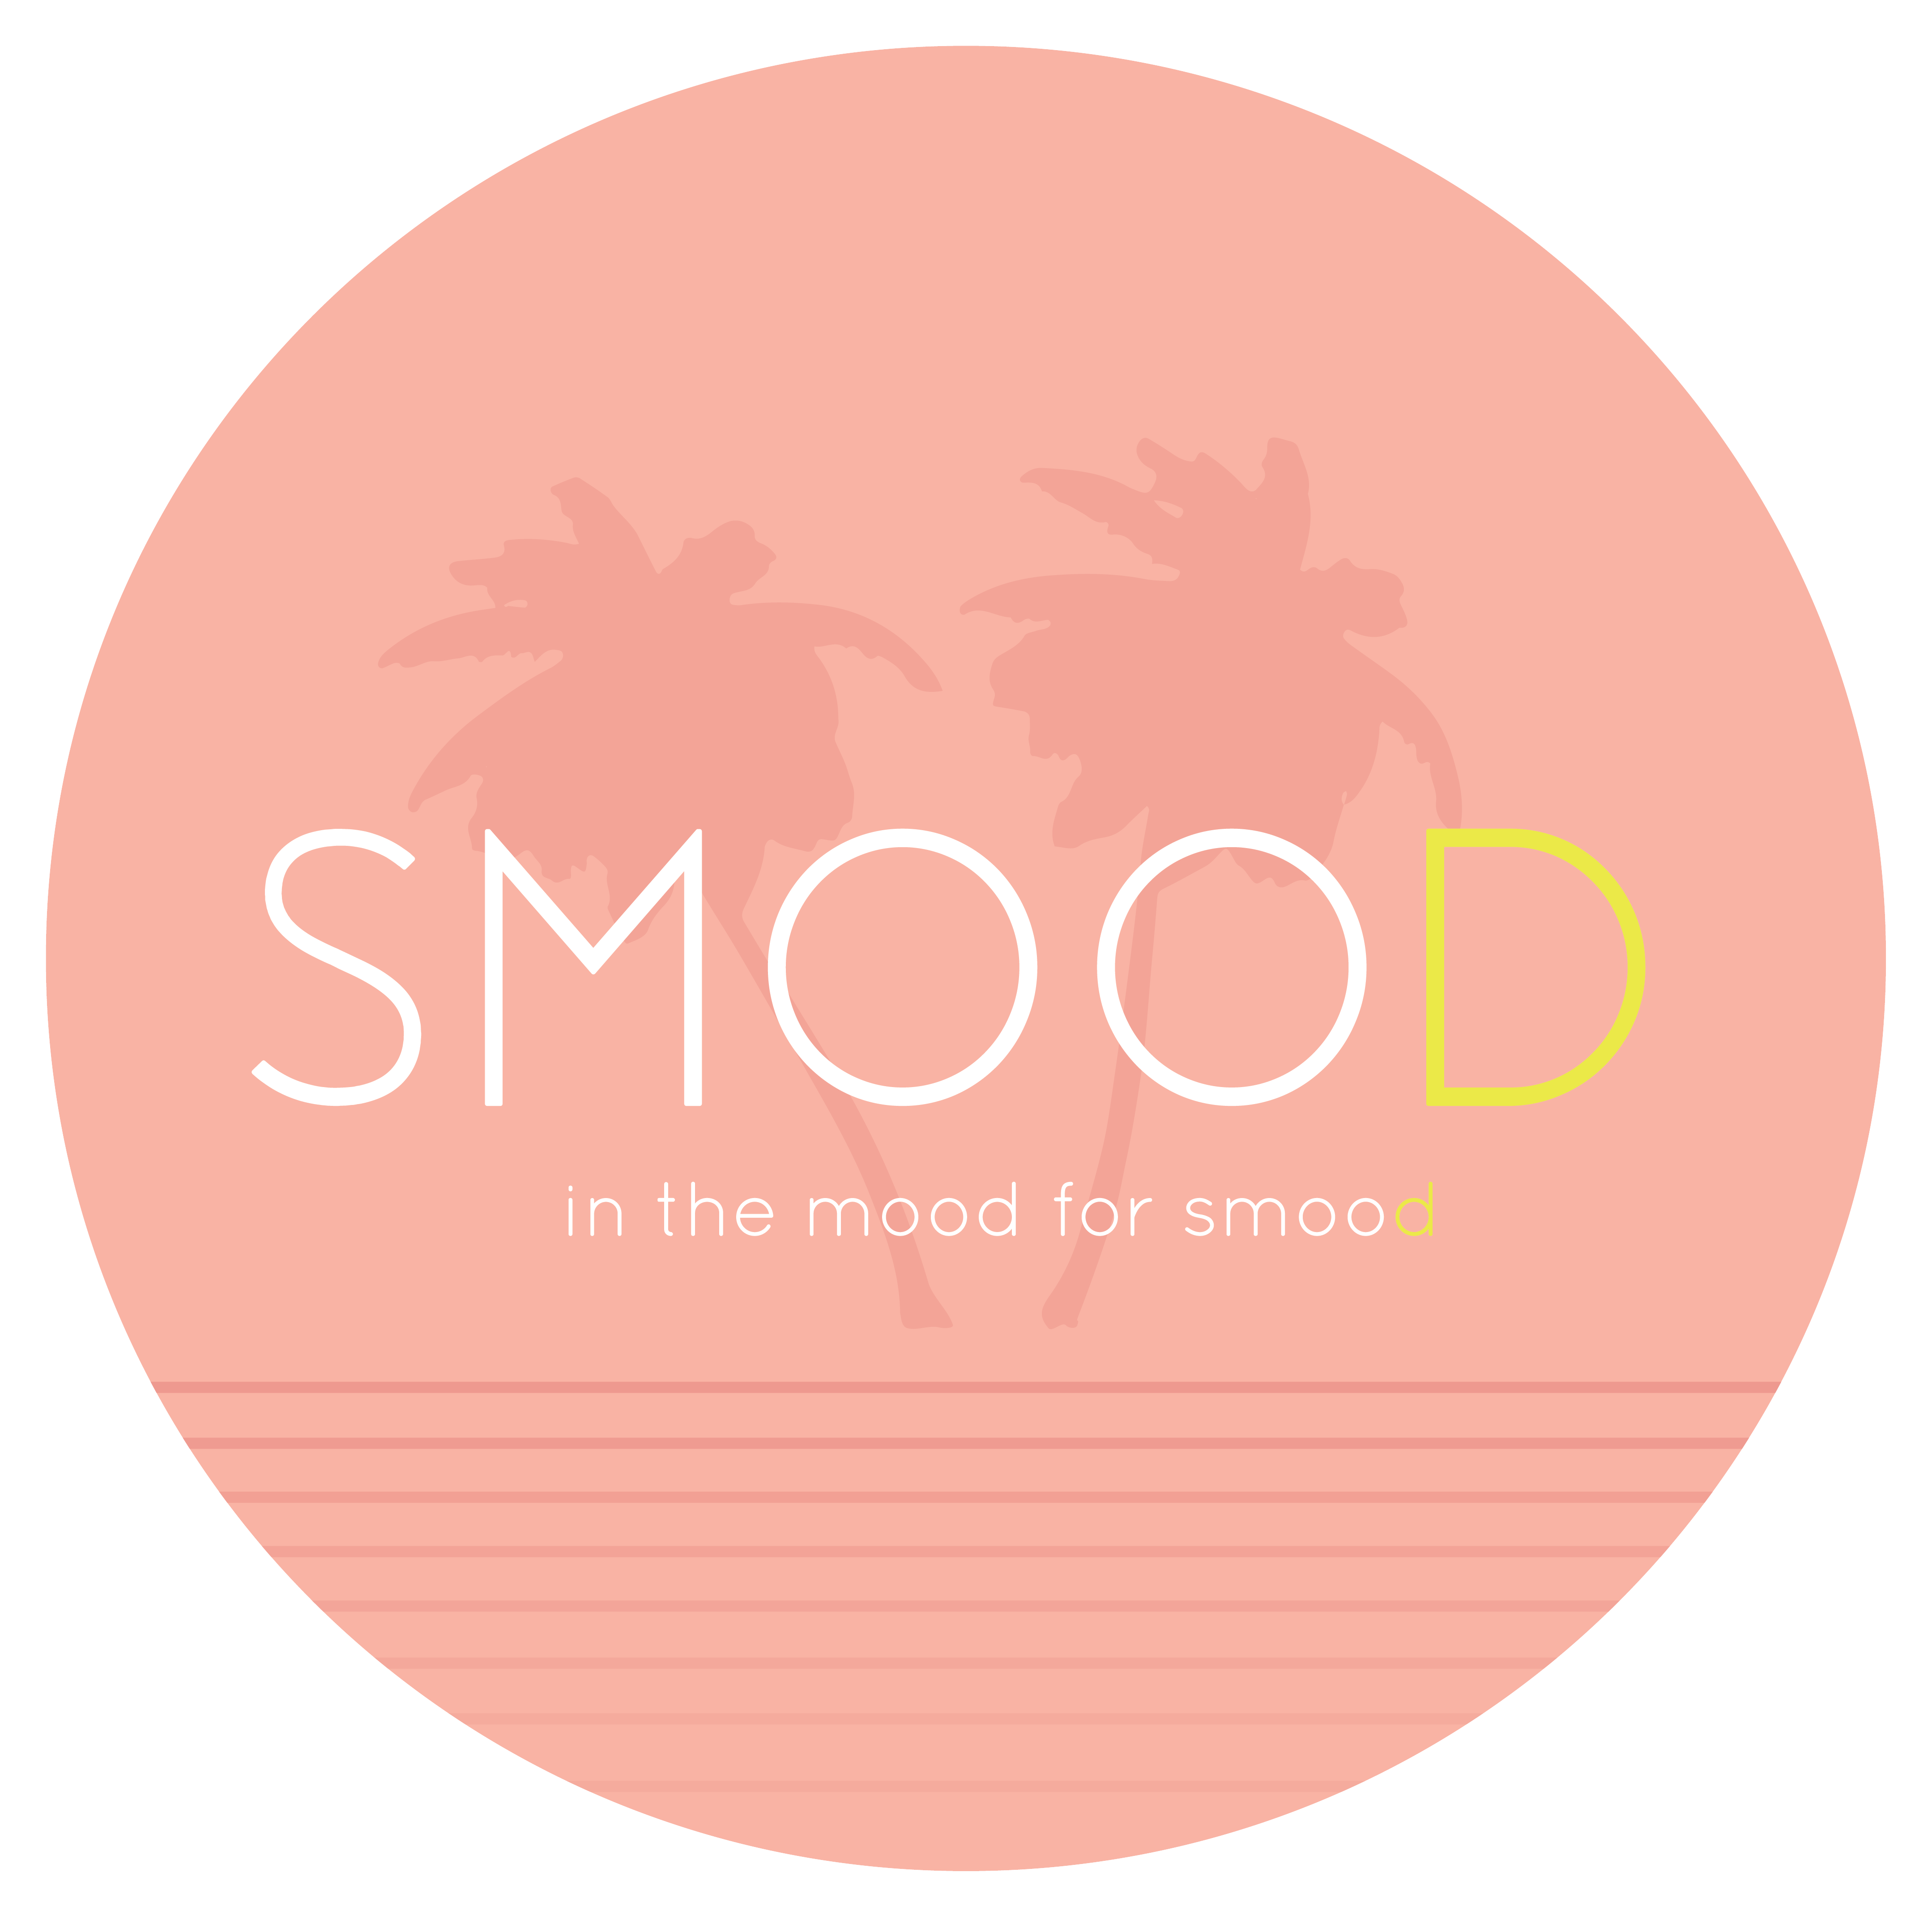 Smoothie label logo, called Smood.